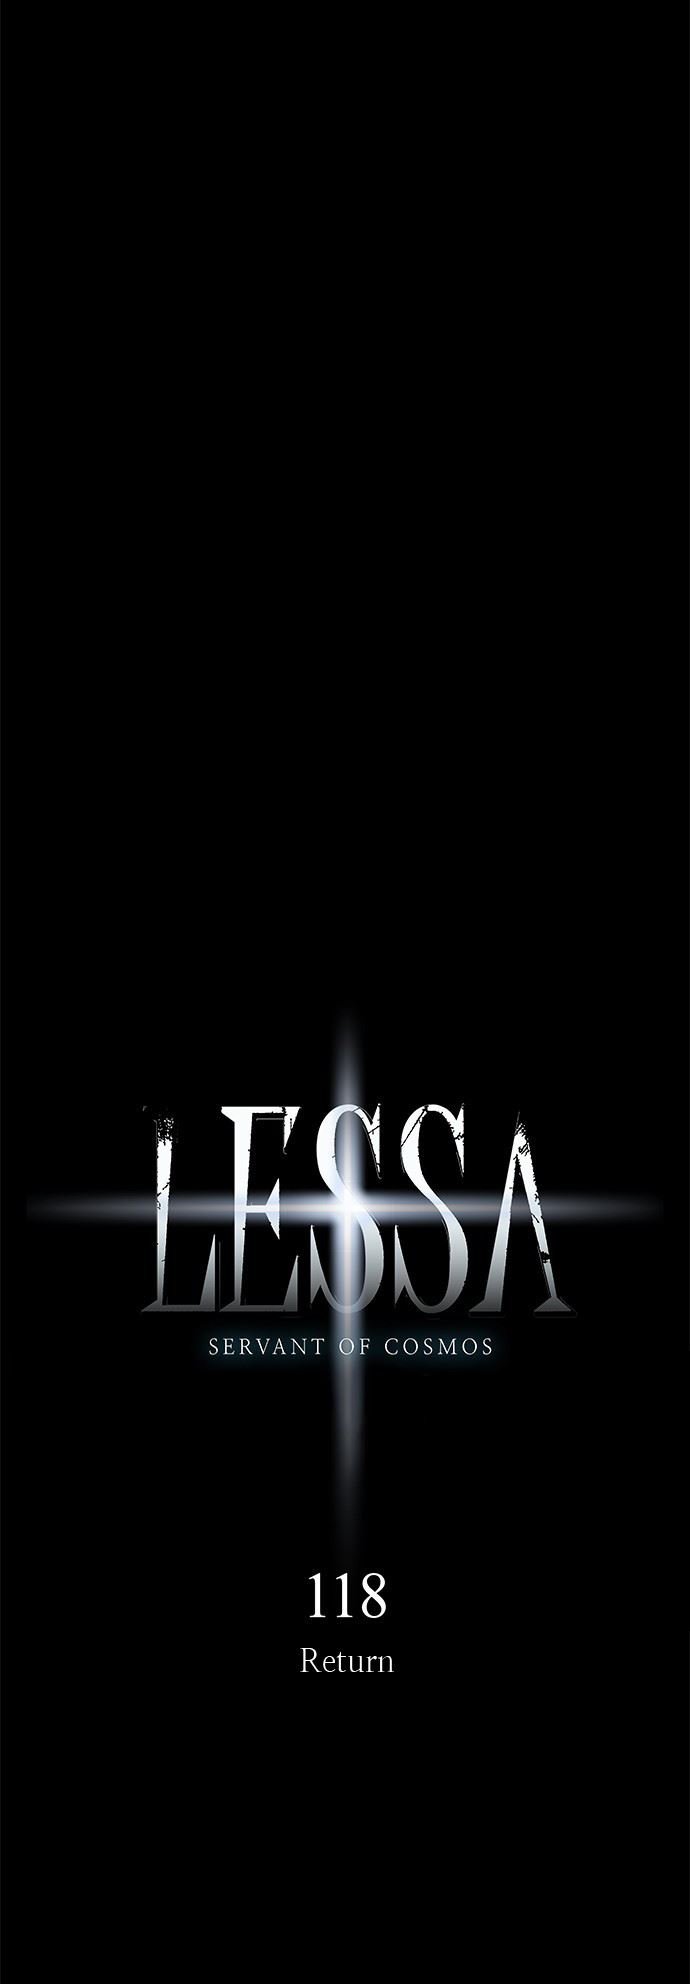 LESSA – Servant of Cosmos Chapter 118